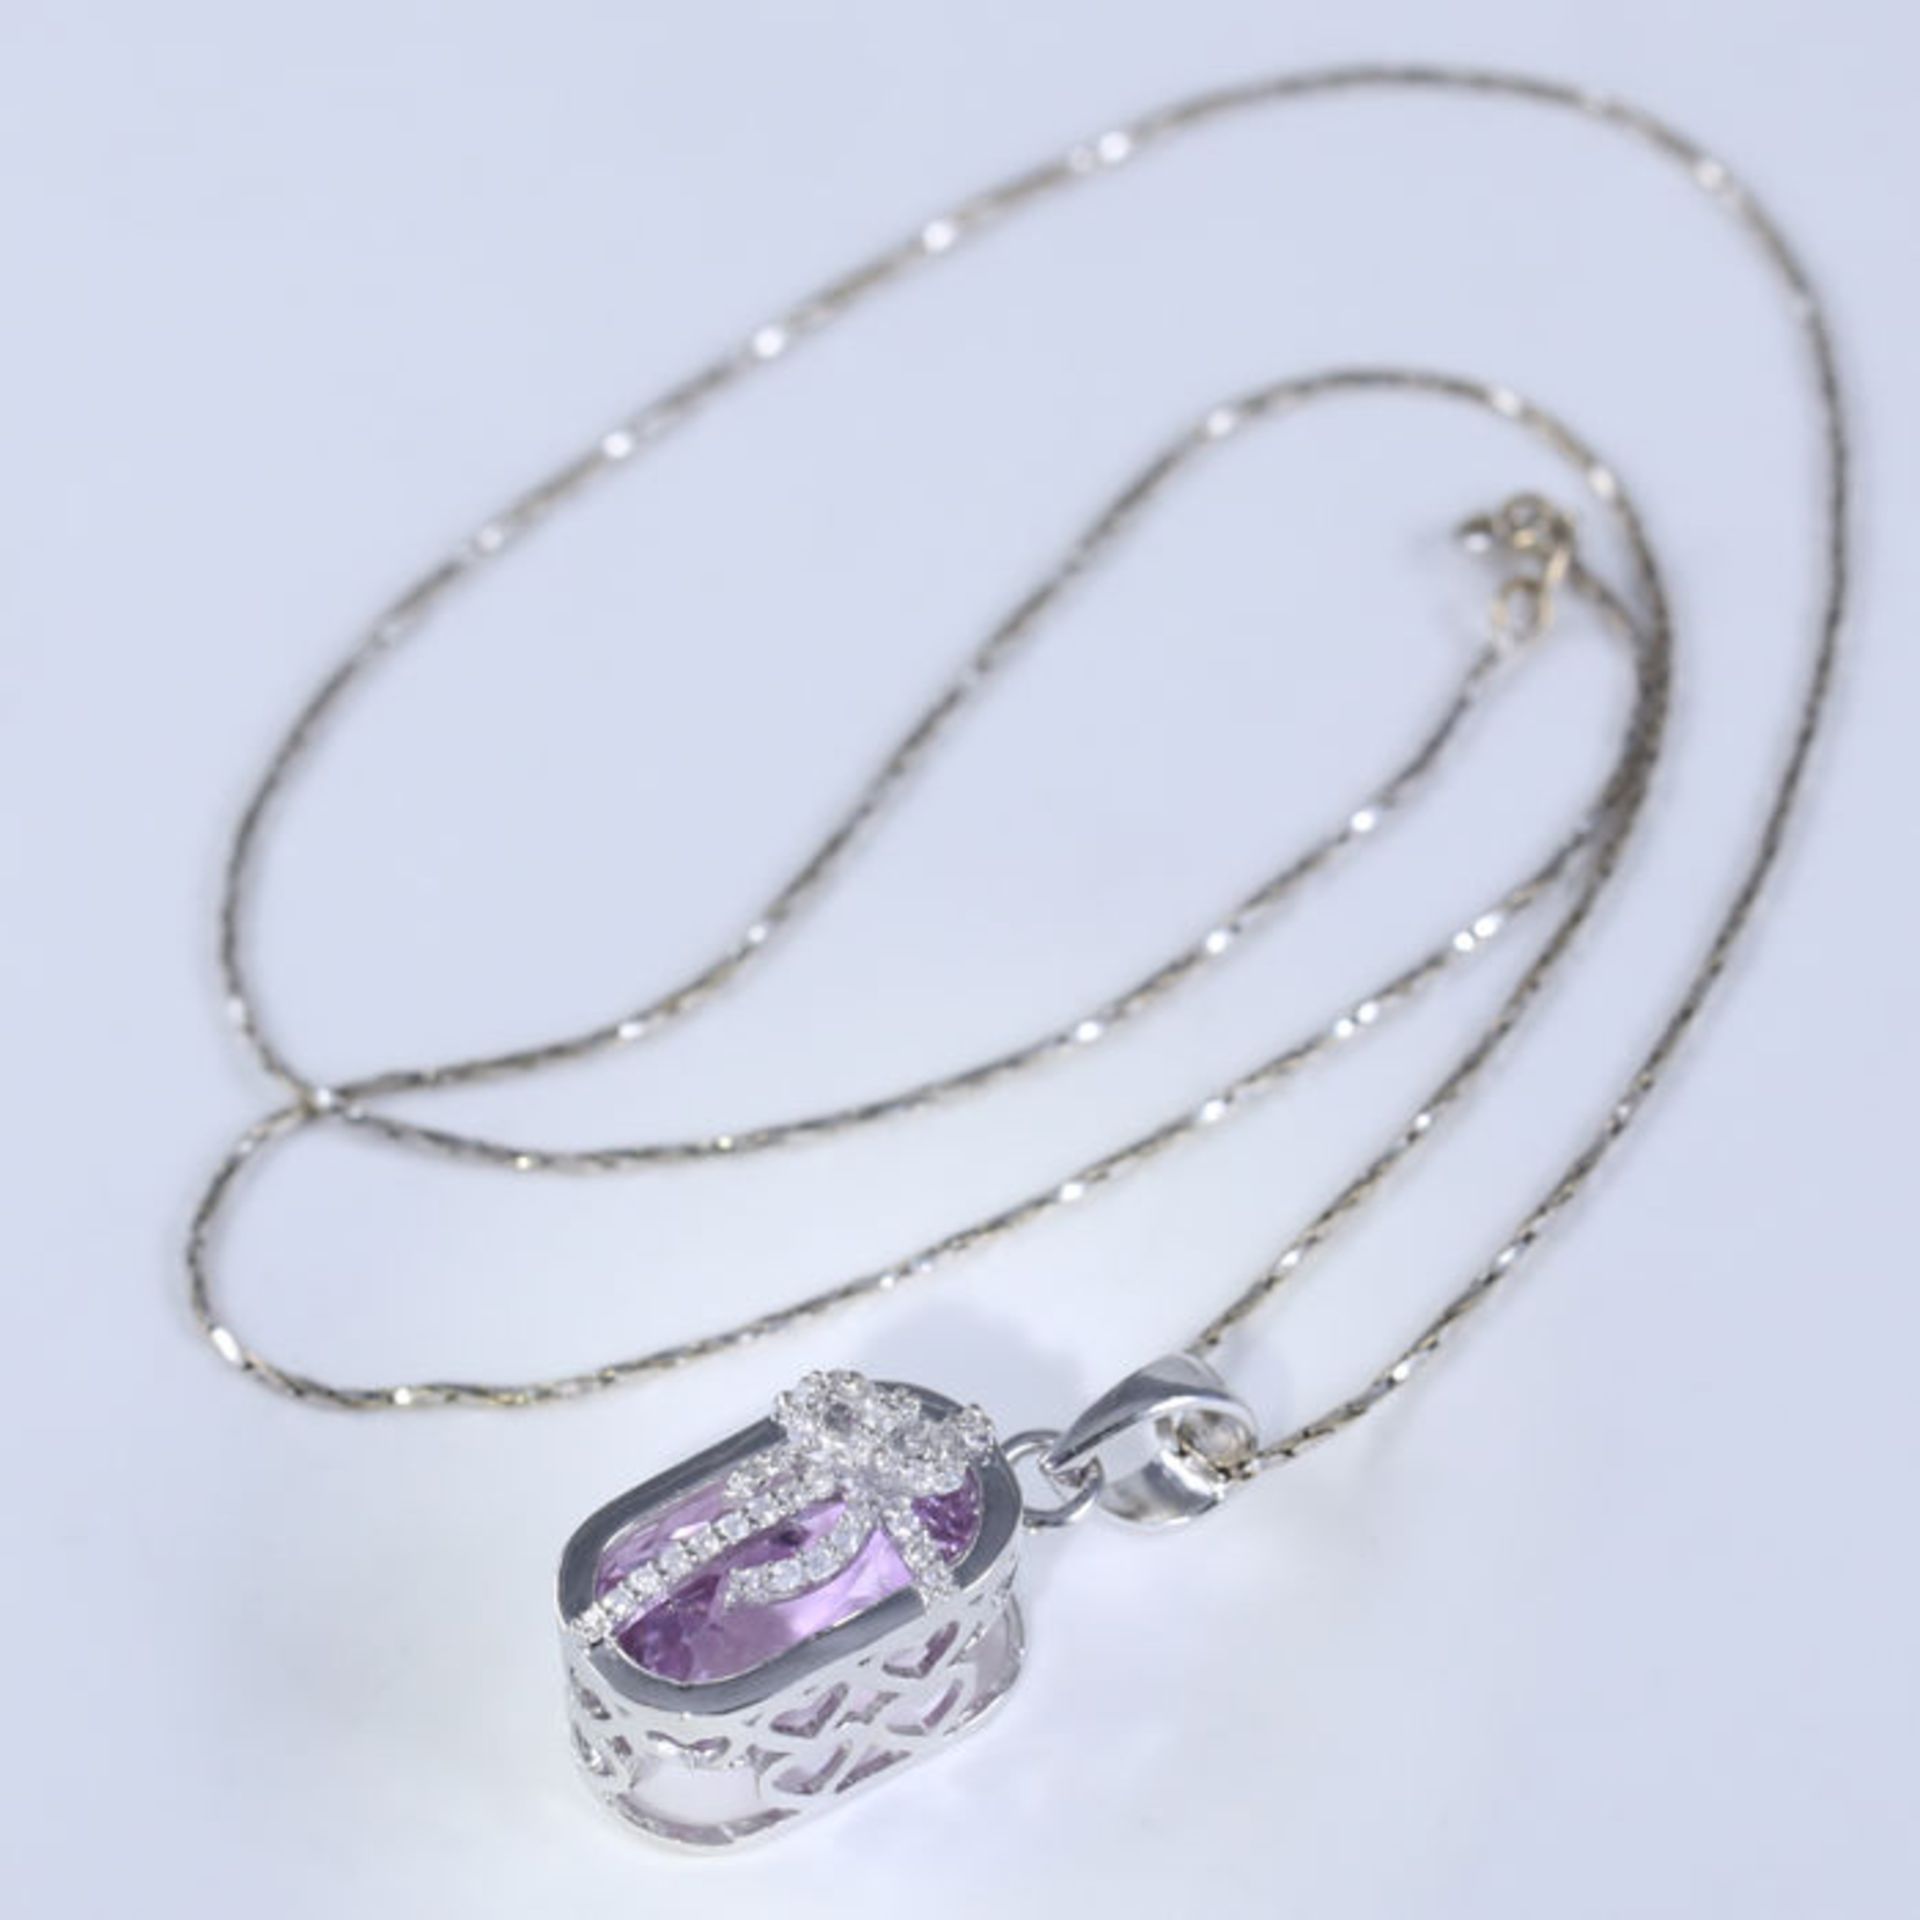 14 K White Gold Designer Kunzite (IGI Certified) and Diamond Pendant Necklace - Image 5 of 6